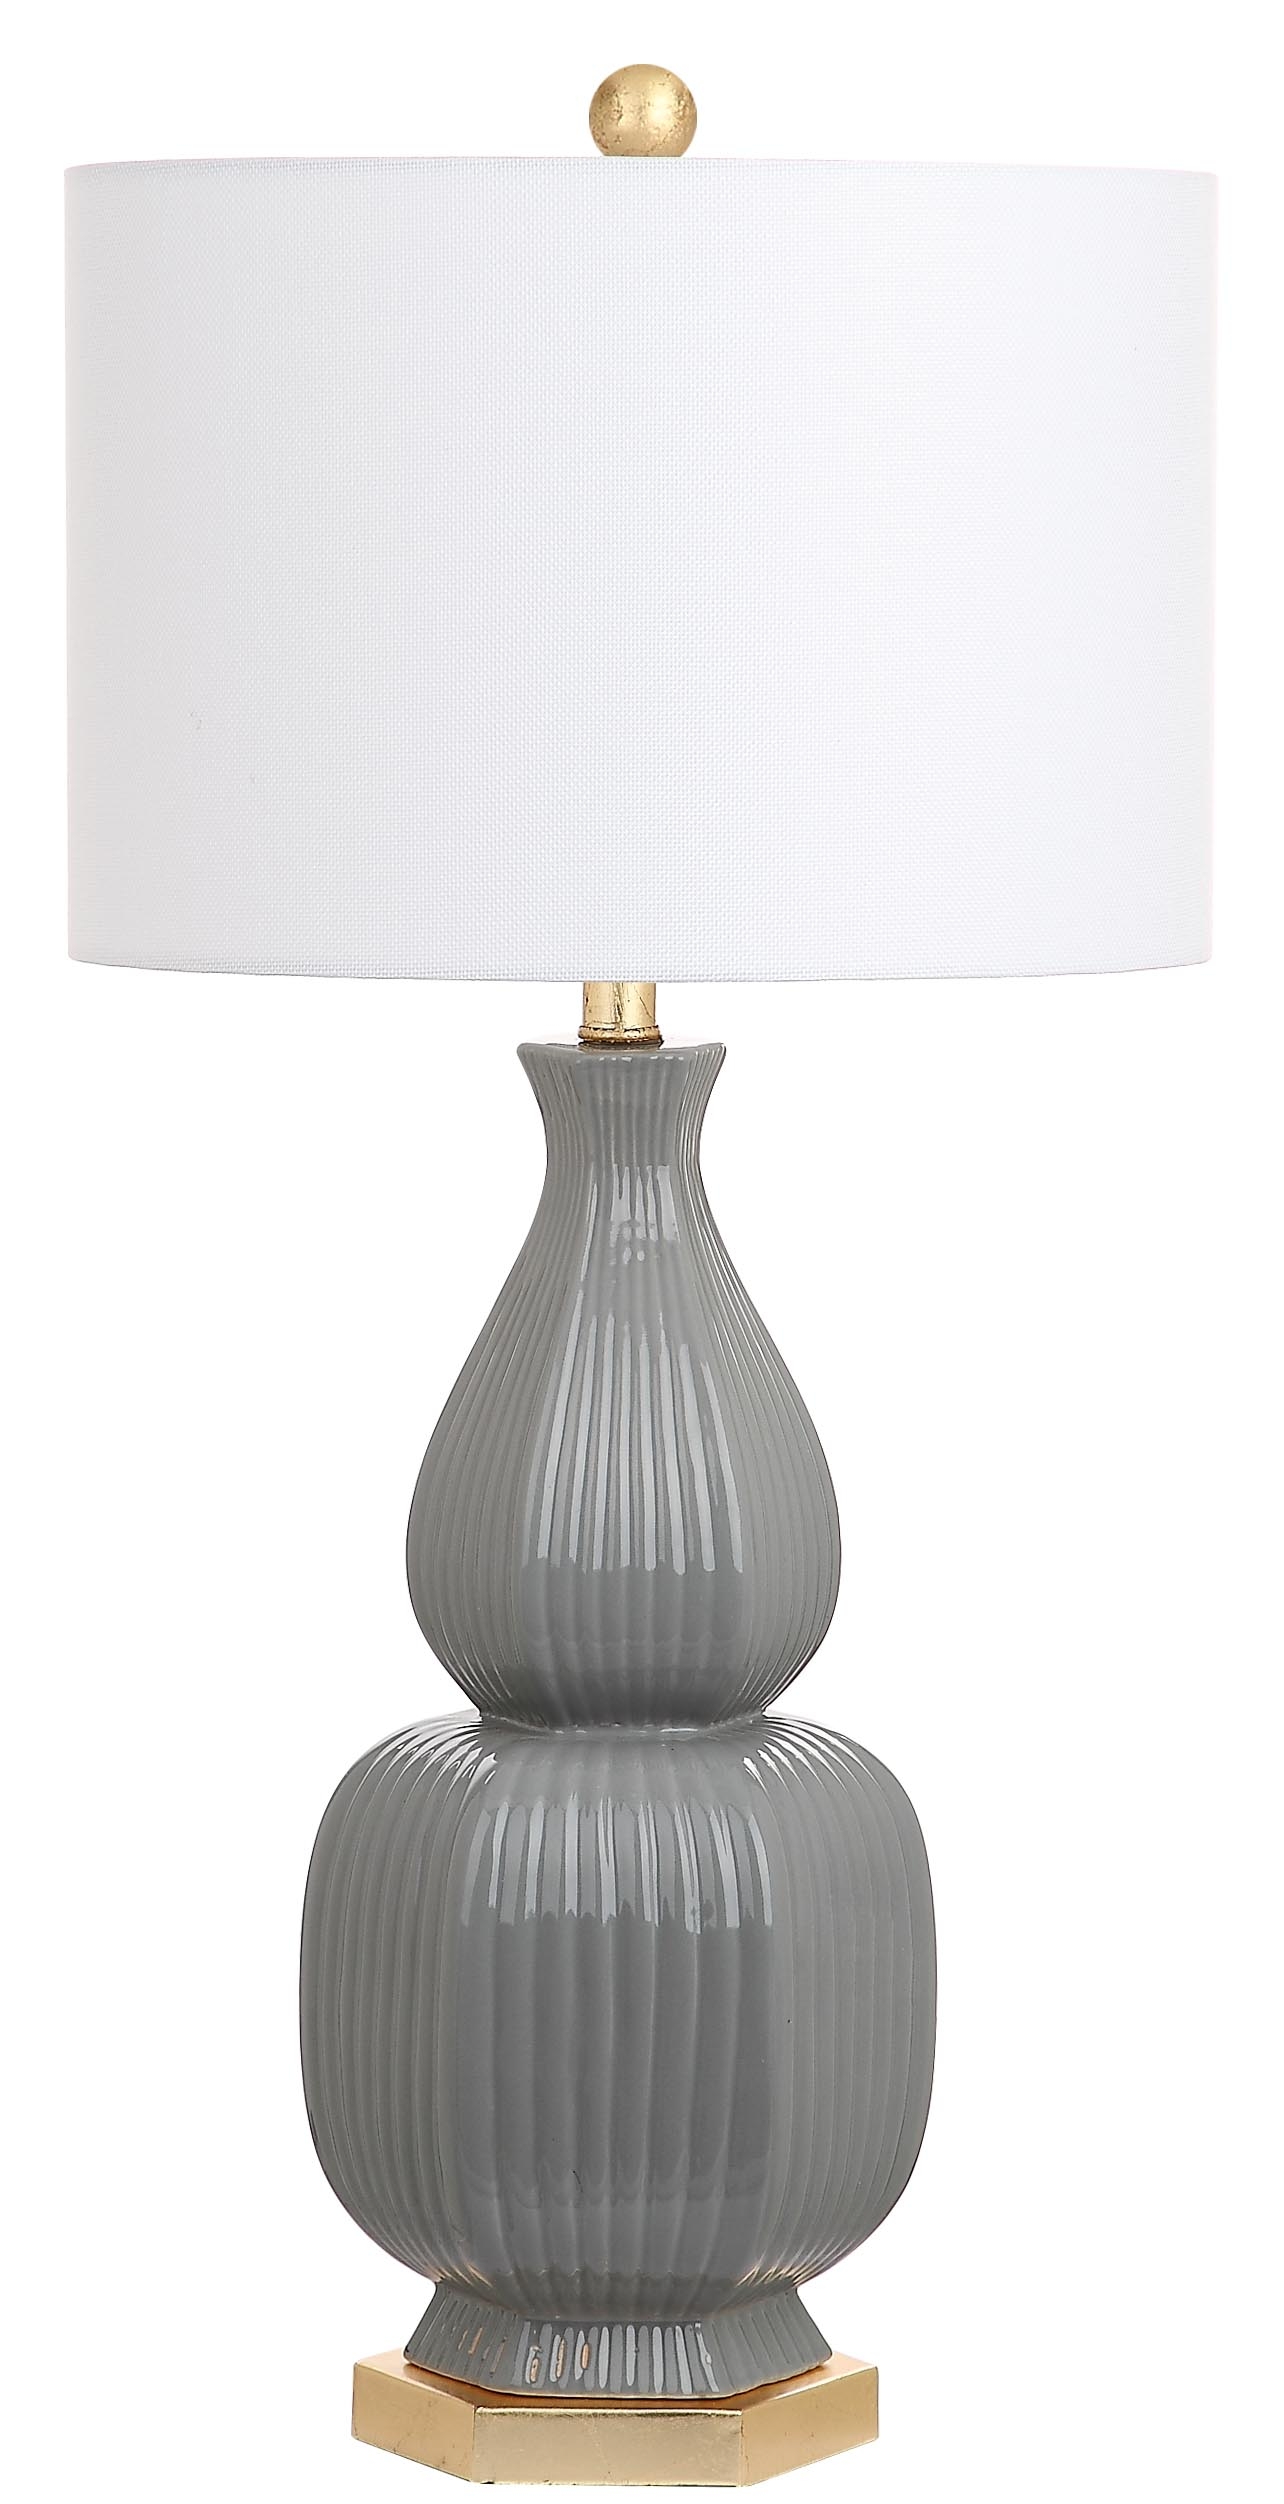 Cleo 31.5-Inch H Table Lamp - Grey - Safavieh - Image 1